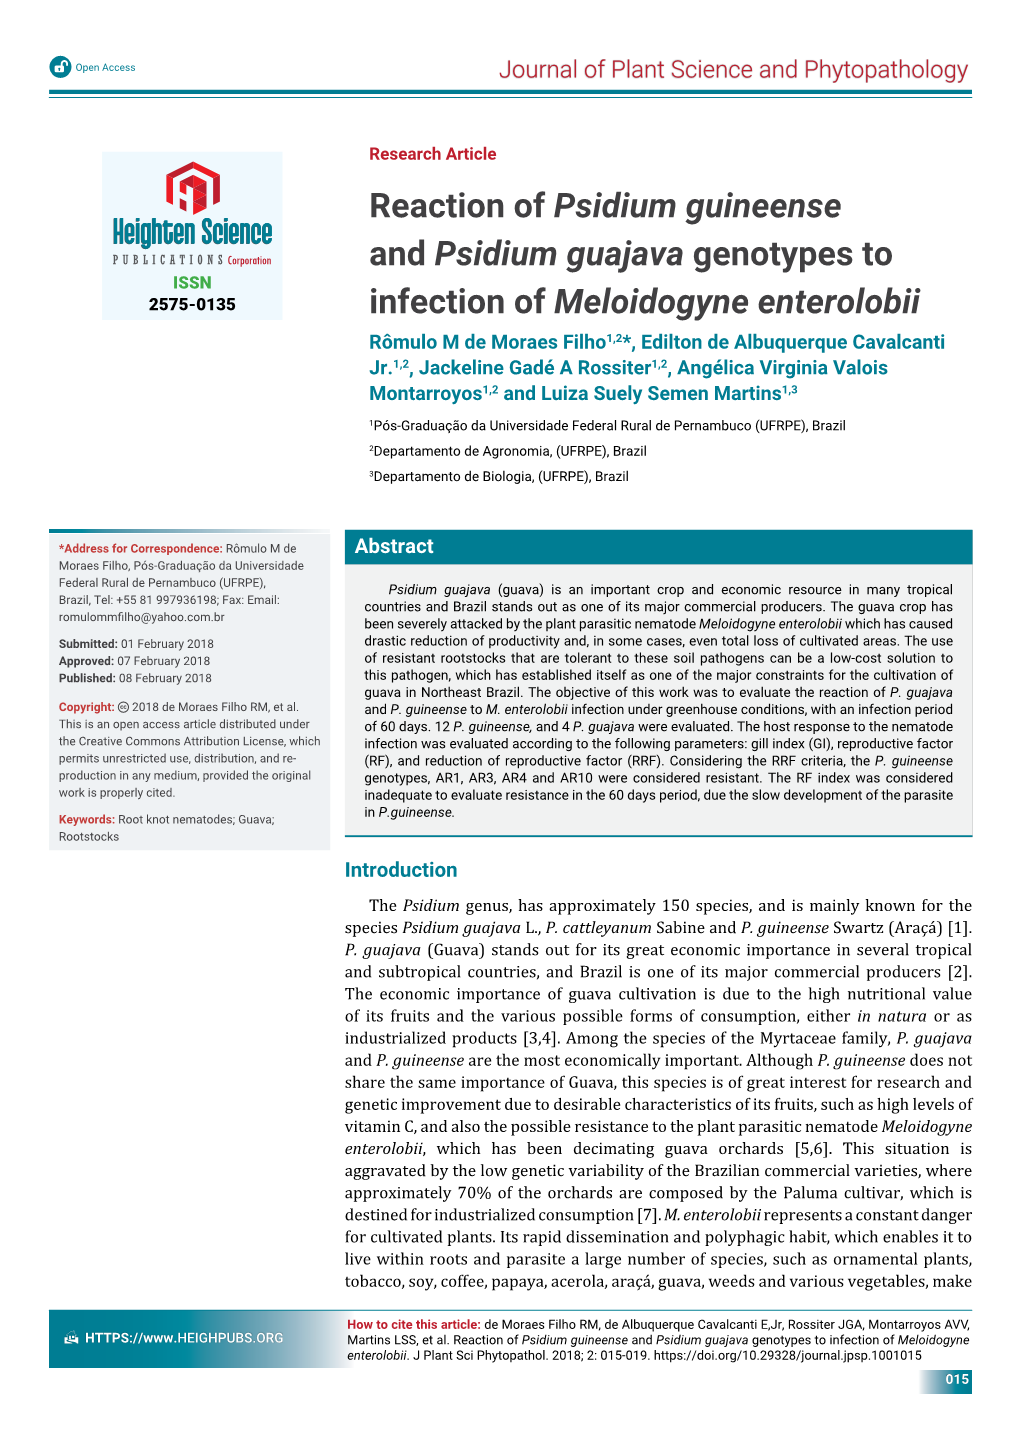 Reaction of Psidium Guineense and Psidium Guajava Genotypes to Infection of Meloidogyne Enterolobii